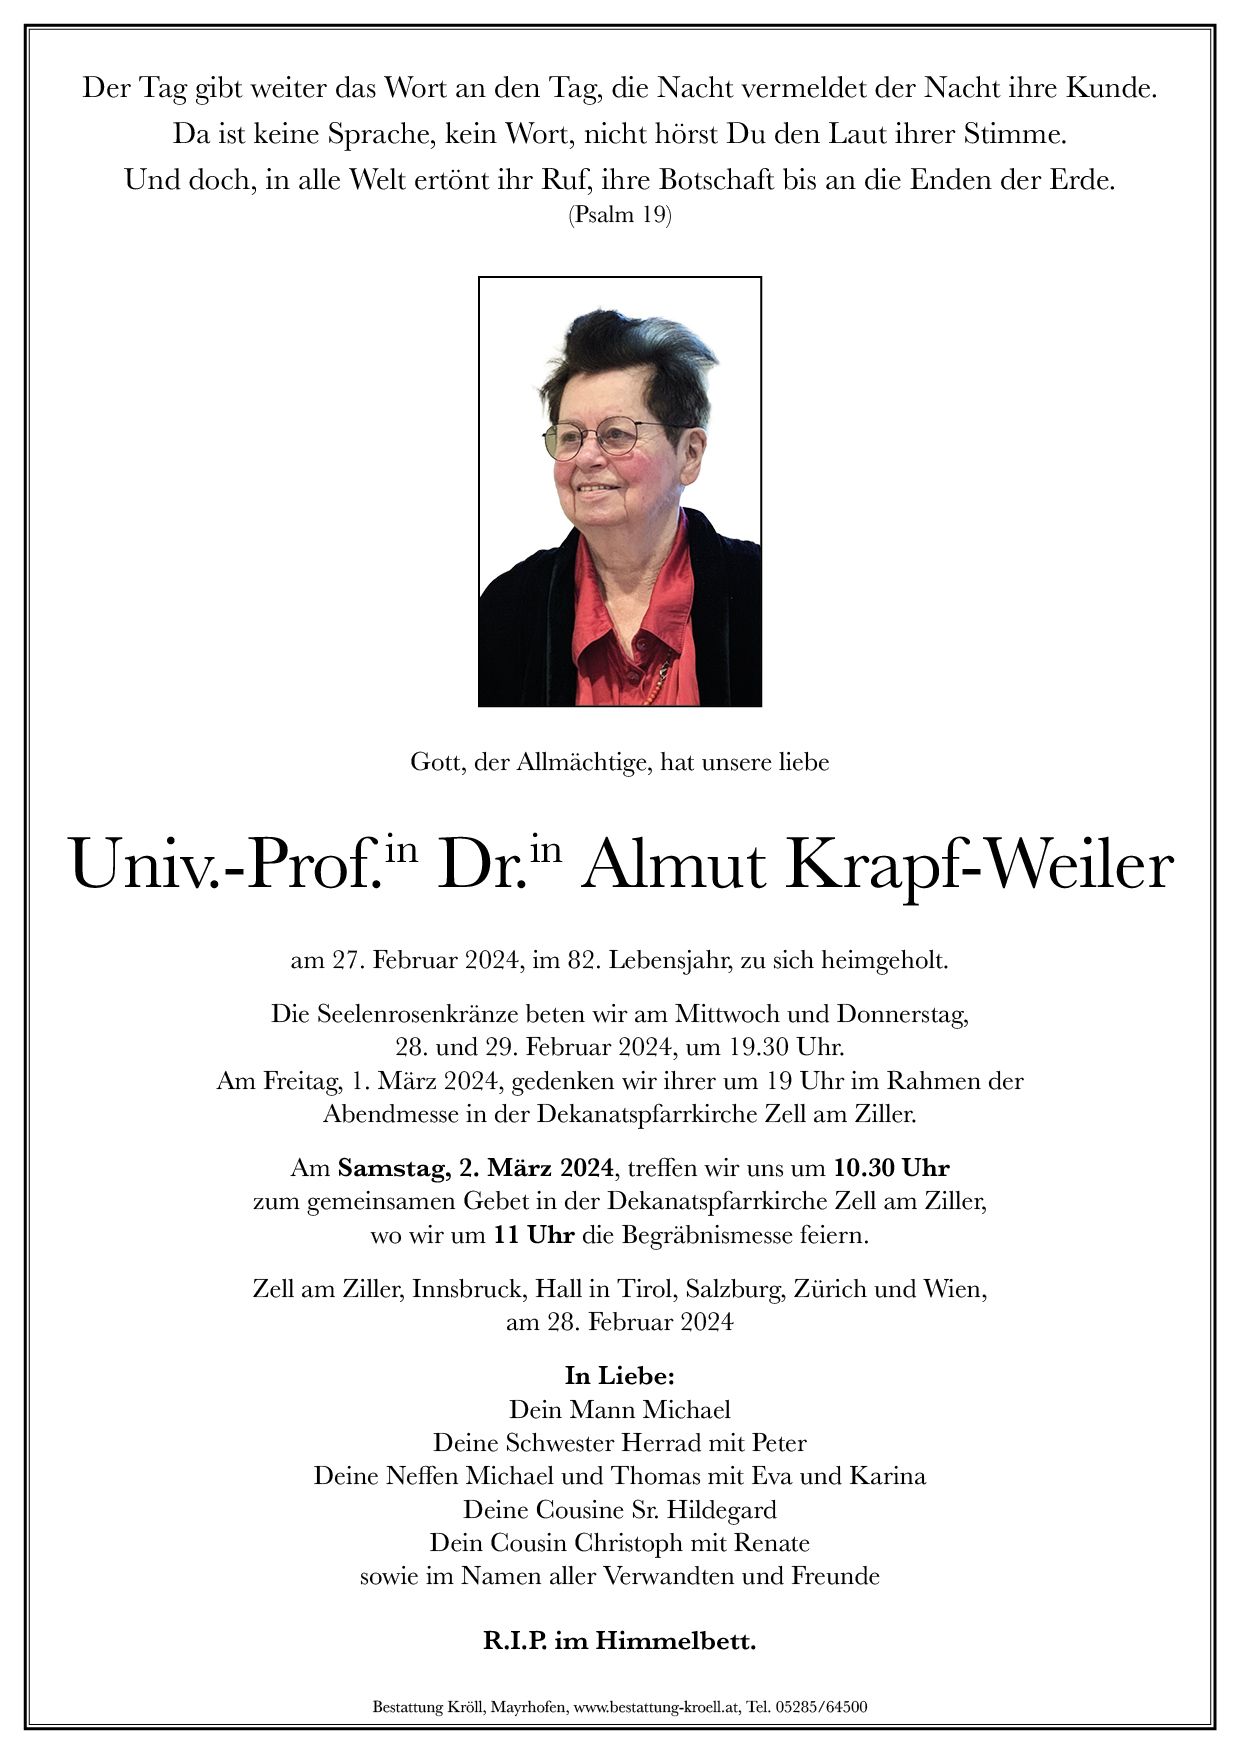 Almut Krapf-Weiler